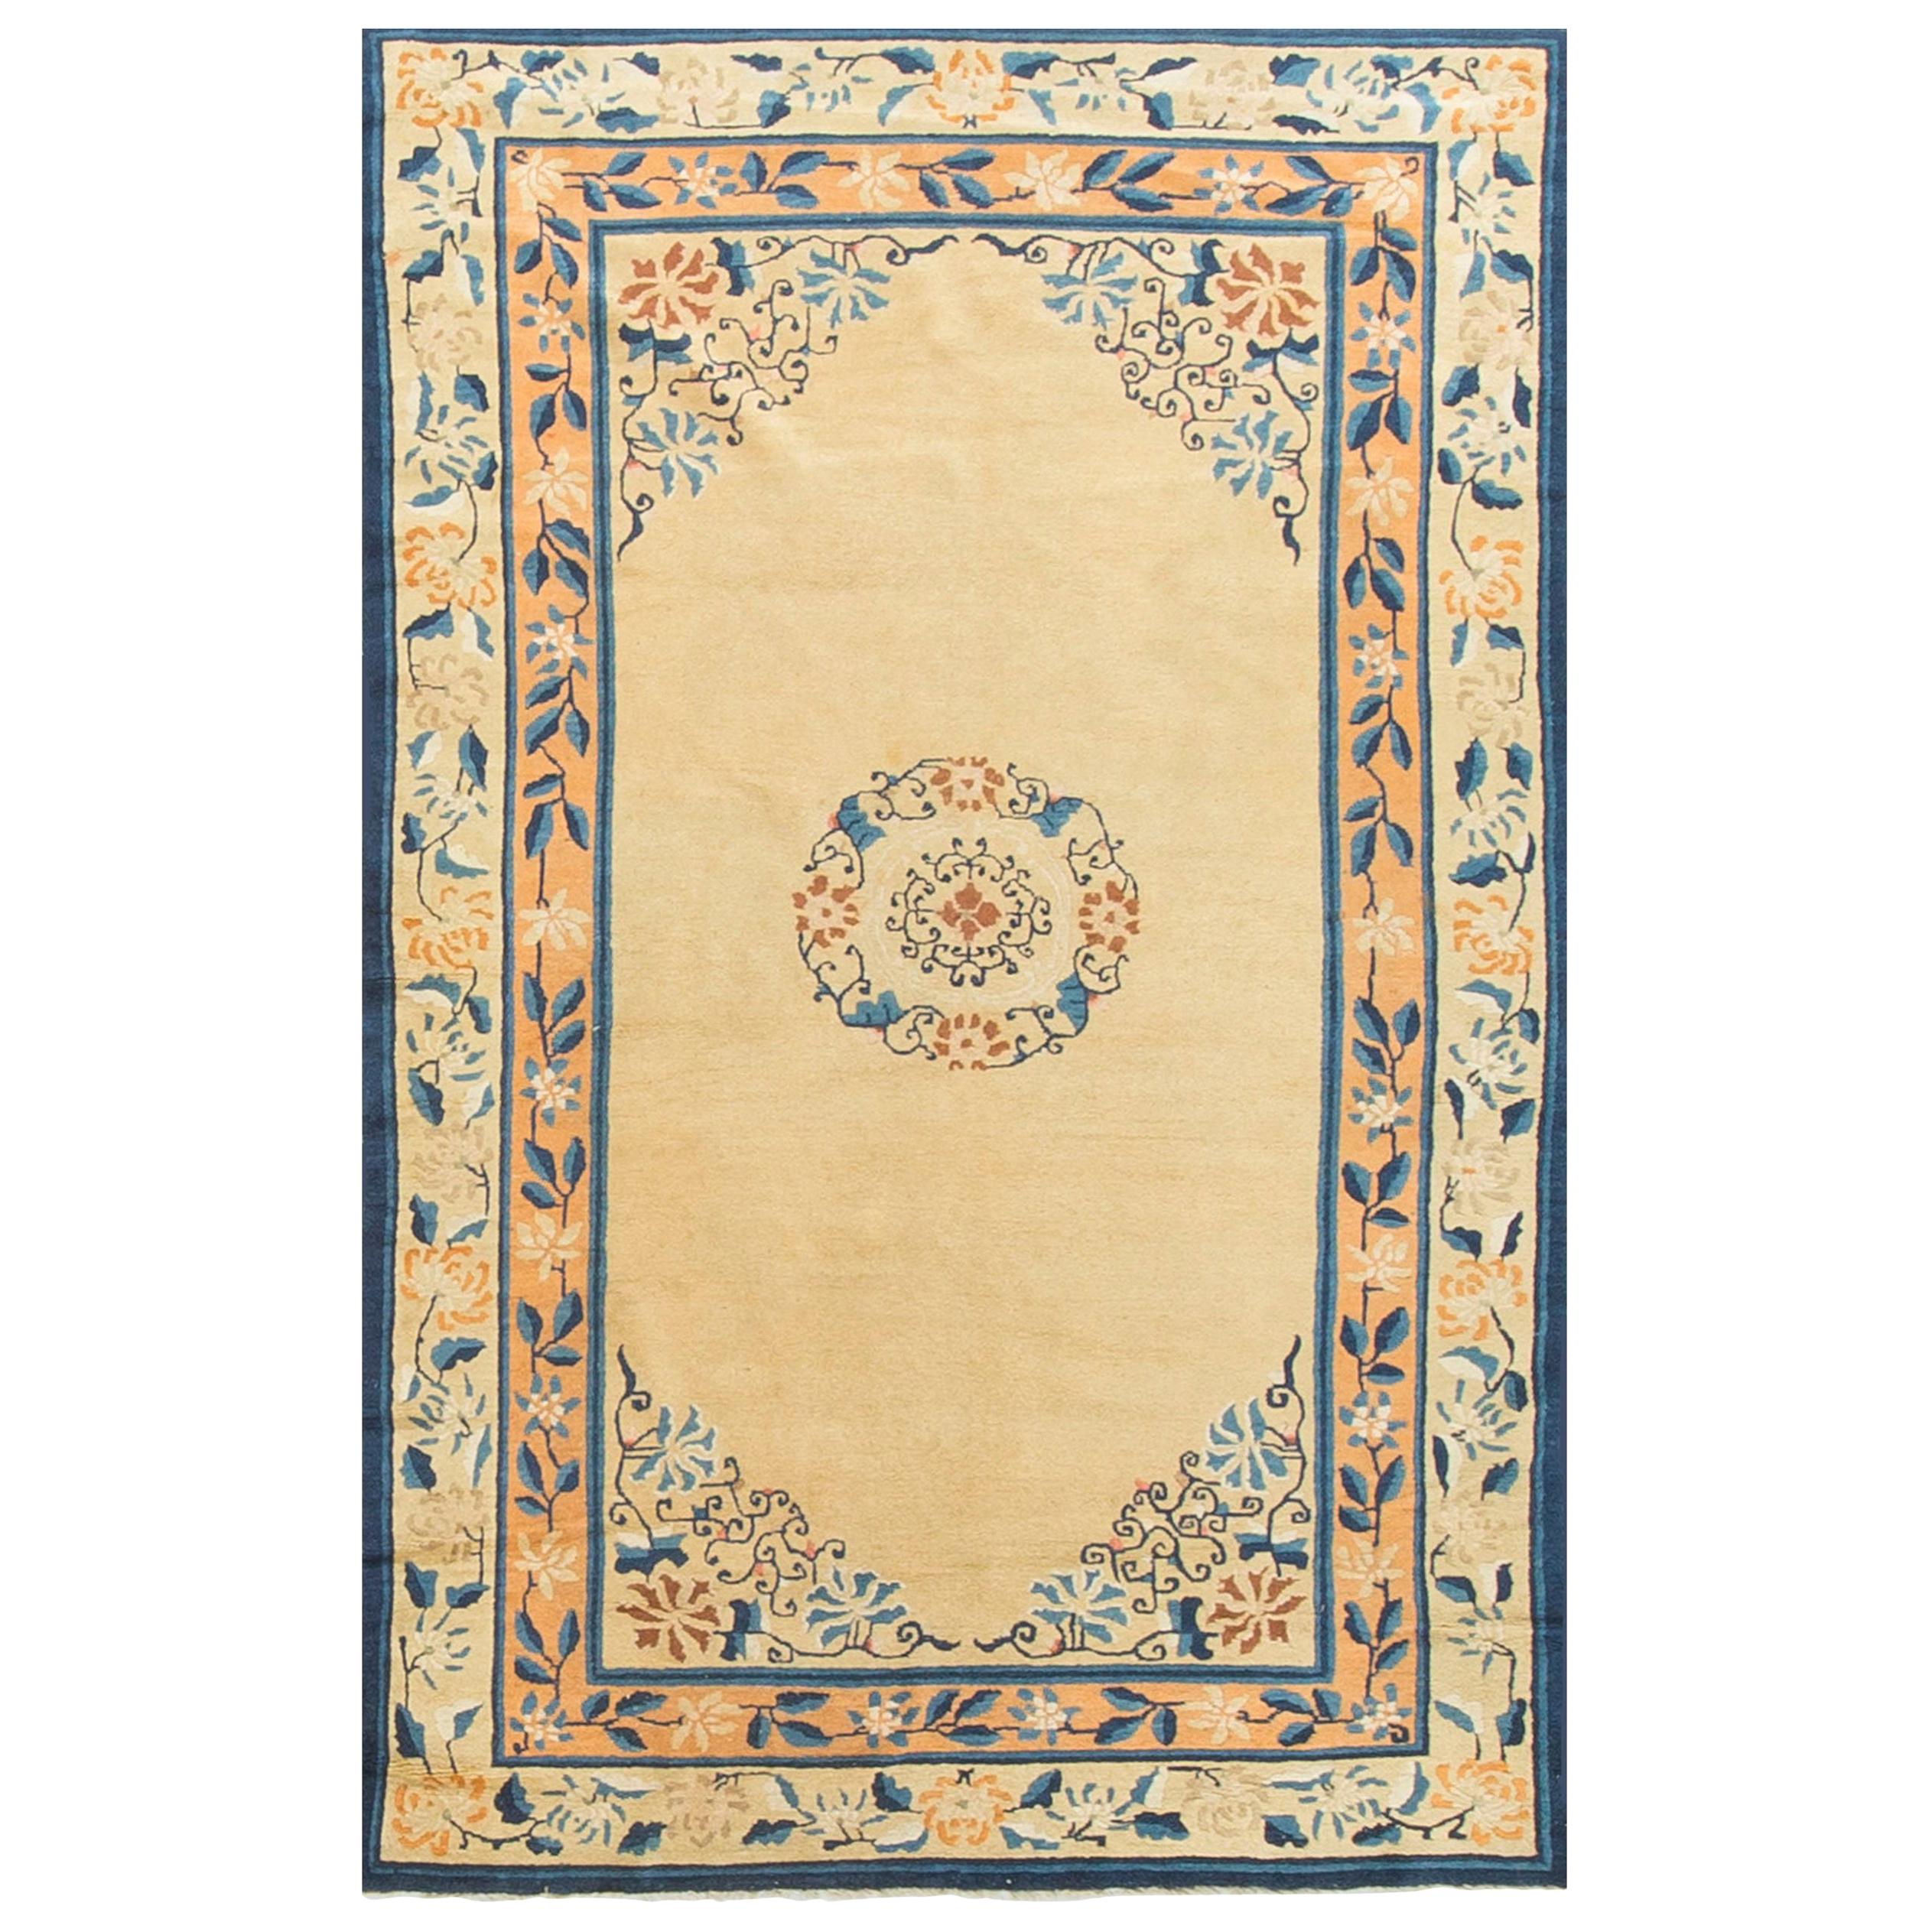 Antiaue Chinese Rug, Carpet, circa 1890 For Sale